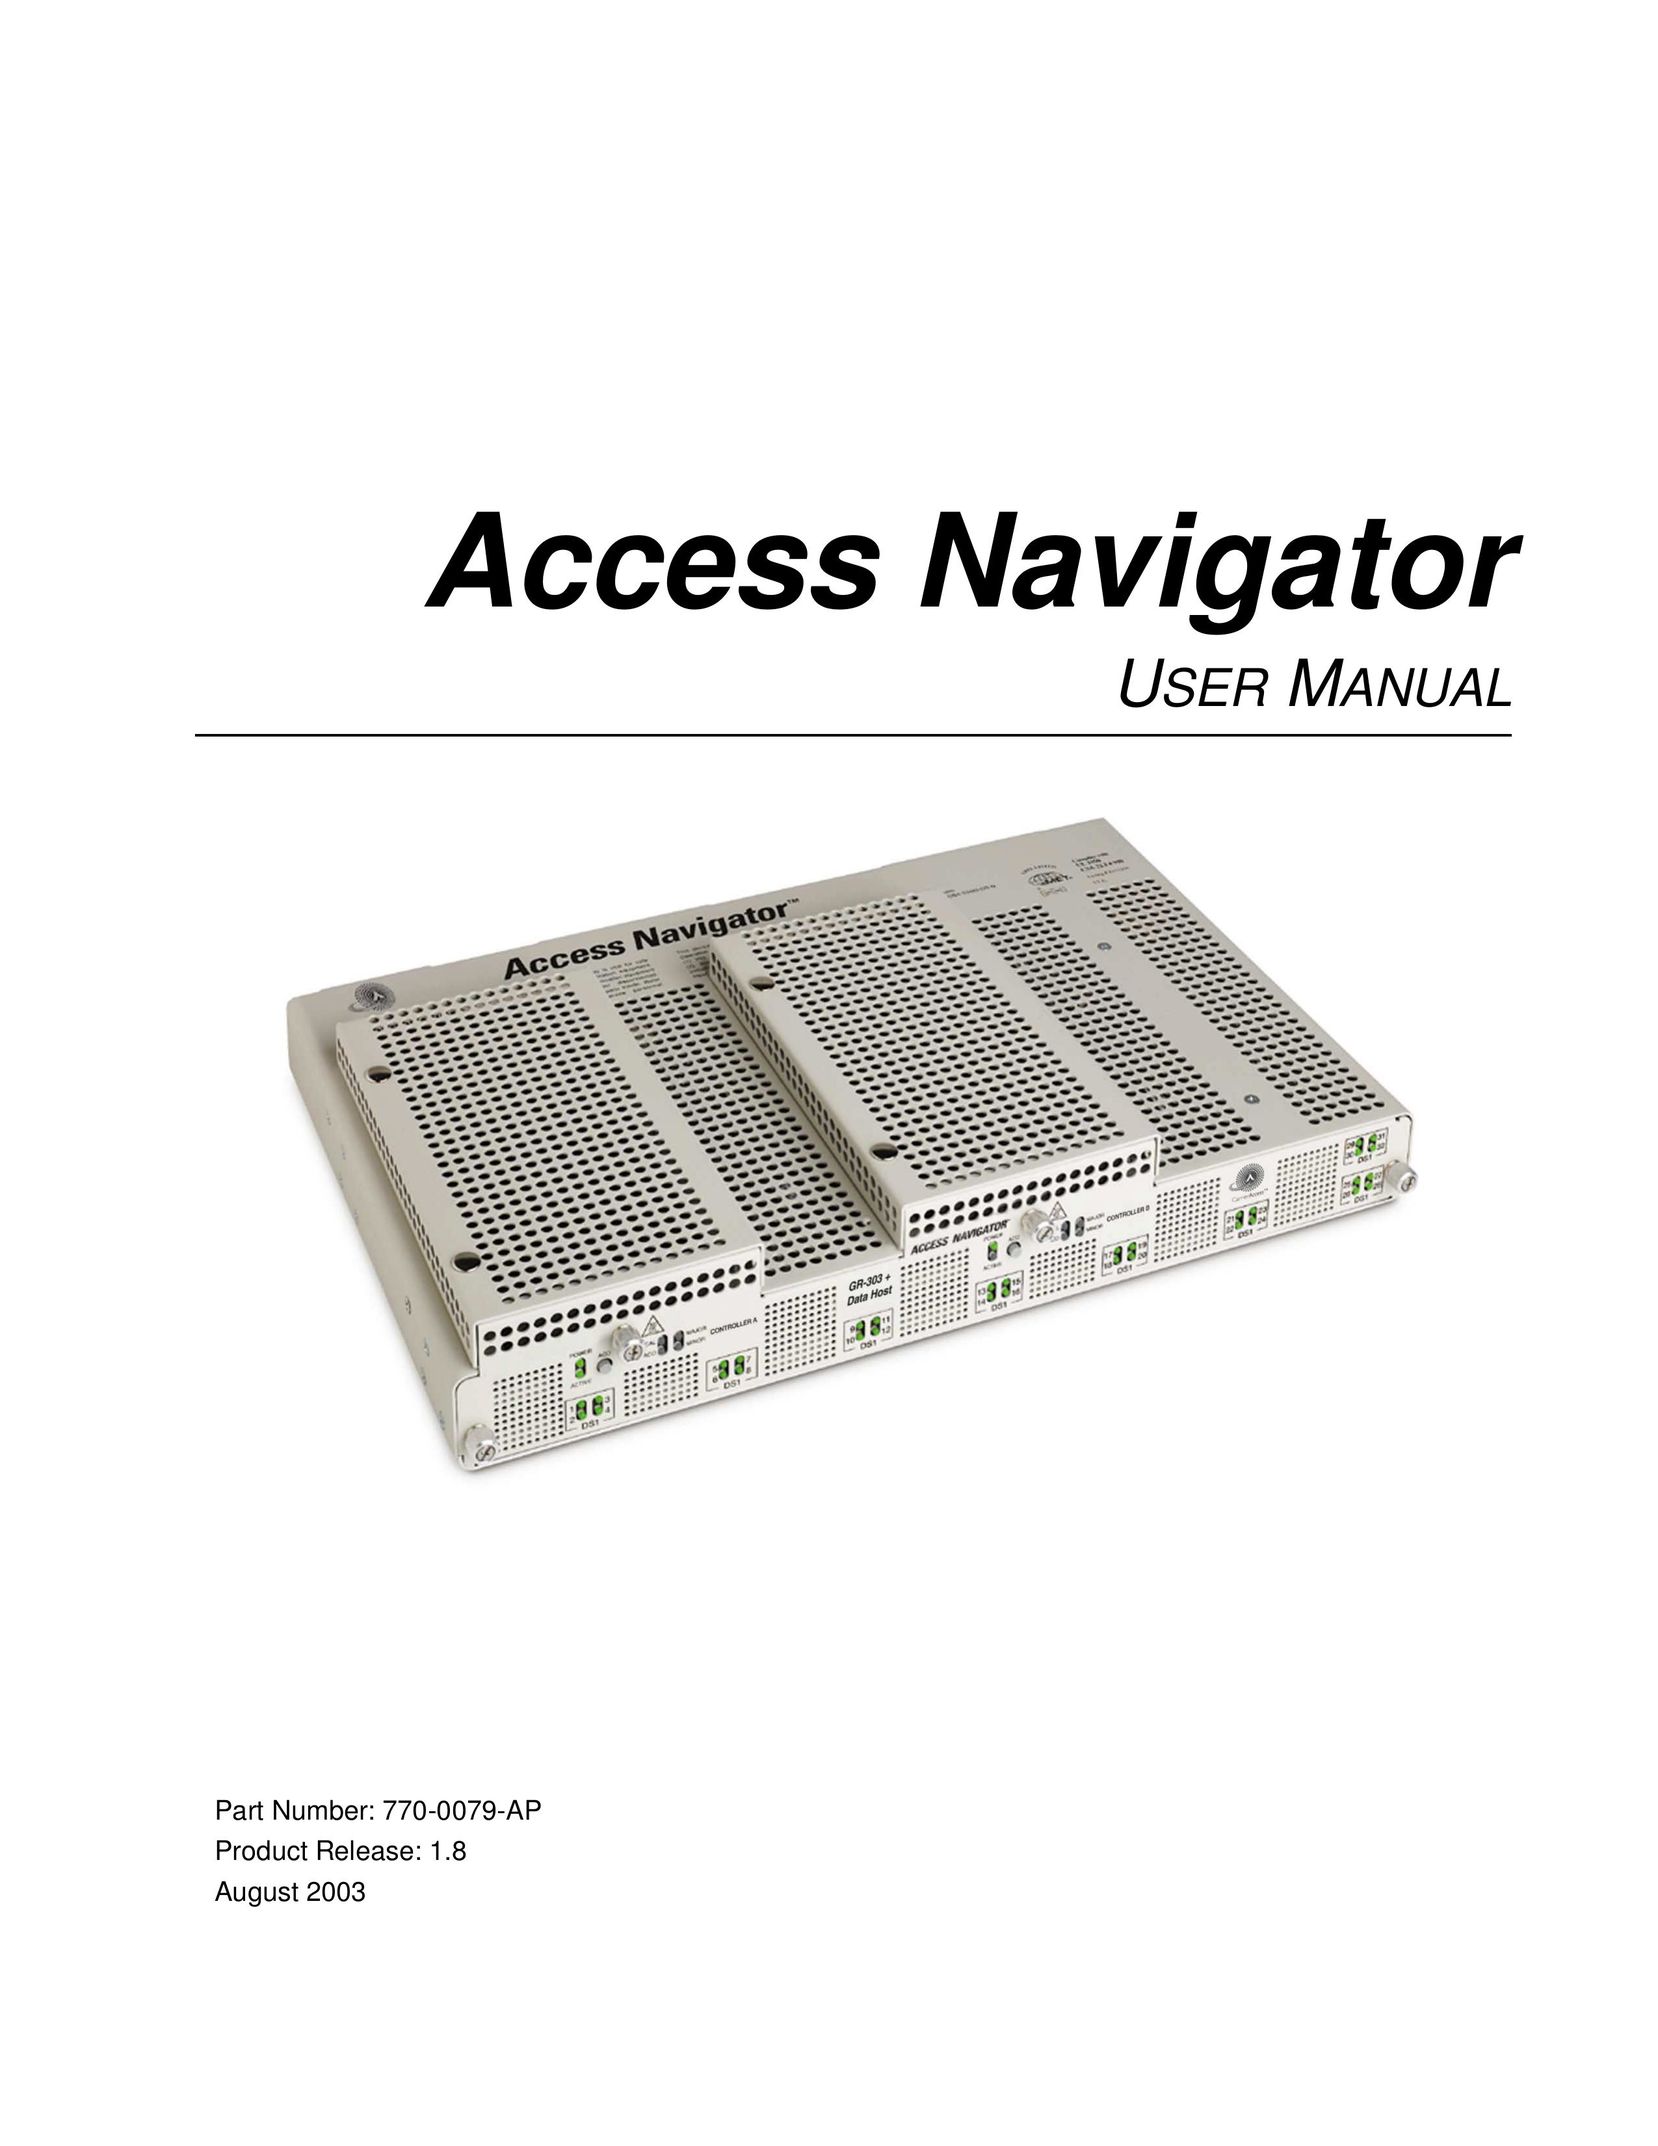 Carrier Access Access Navigator Network Router User Manual